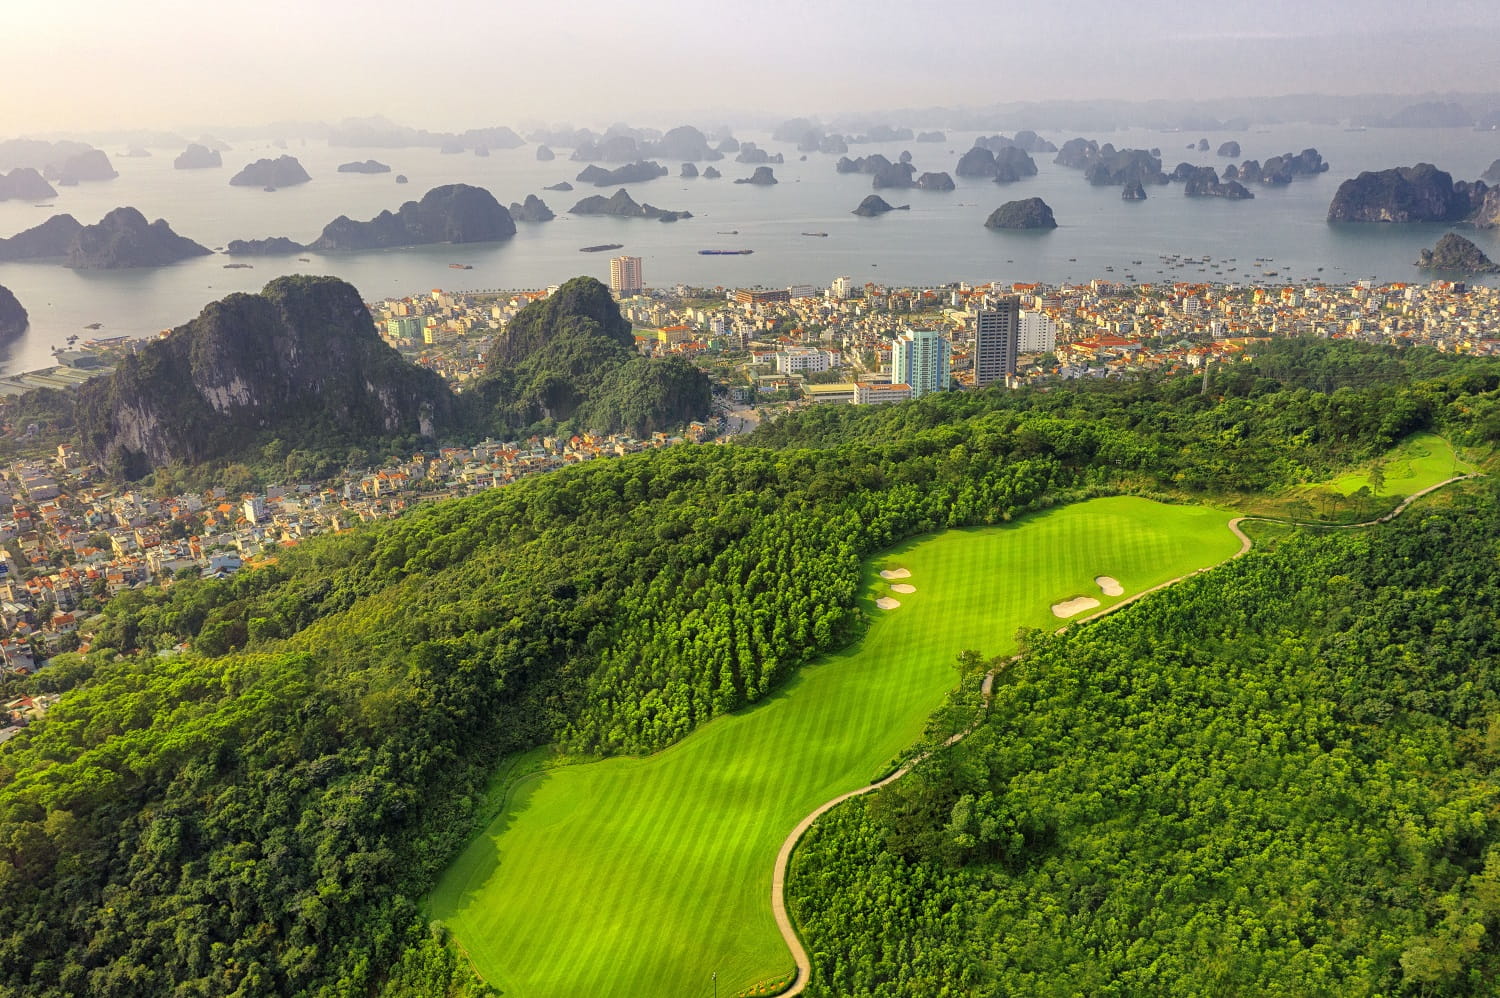 FLC Ha Long Bay Golf Club & Luxury Resort